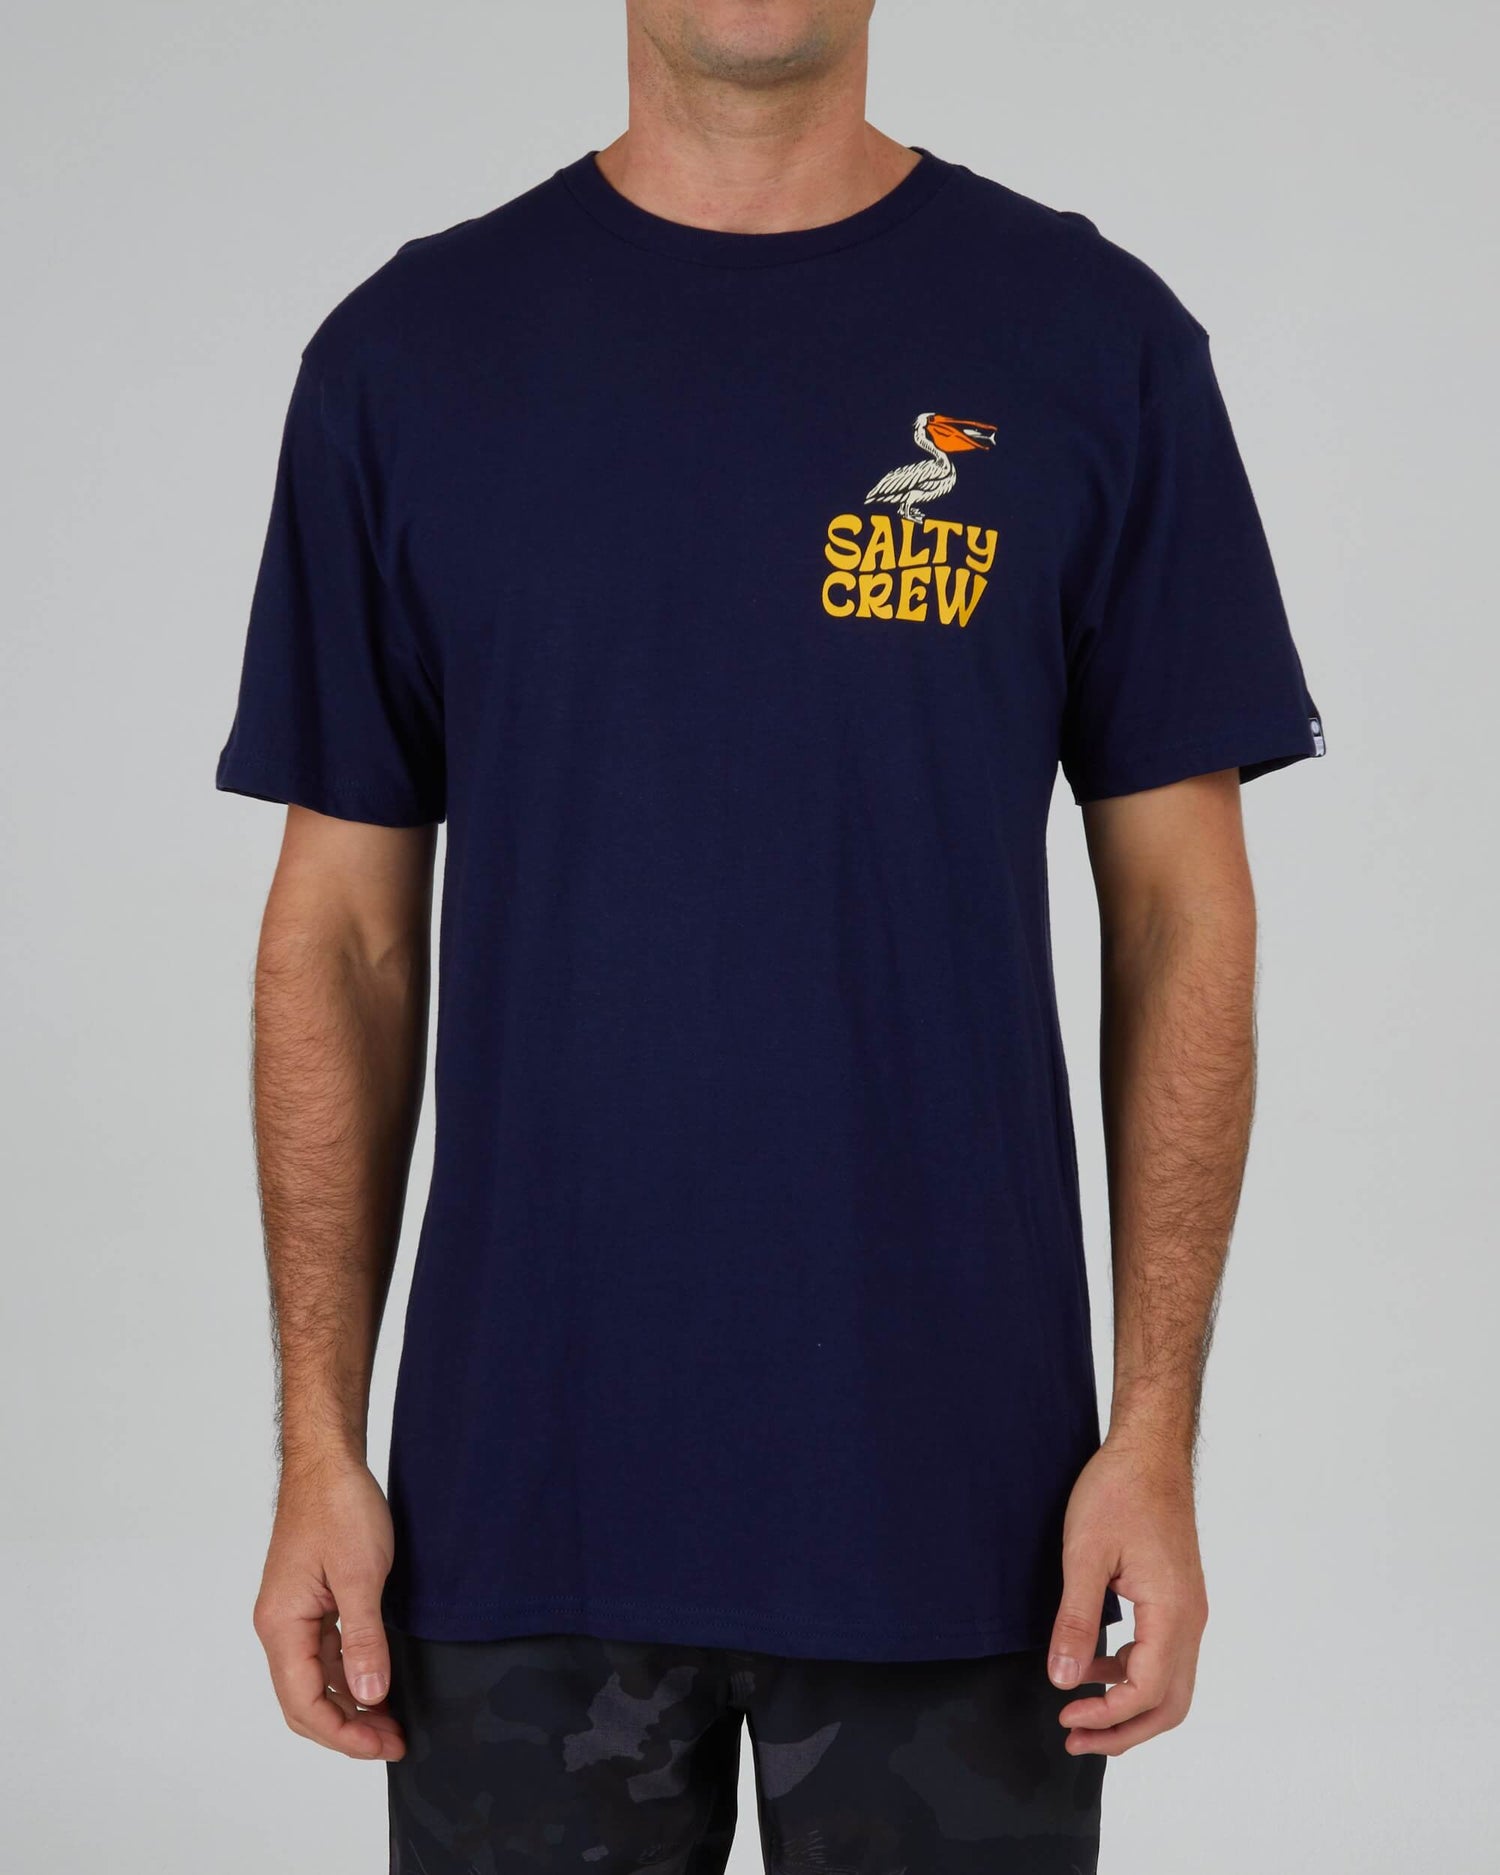 Salty Crew Navy Blue Long Sleeve Shirt Size Men's Medium